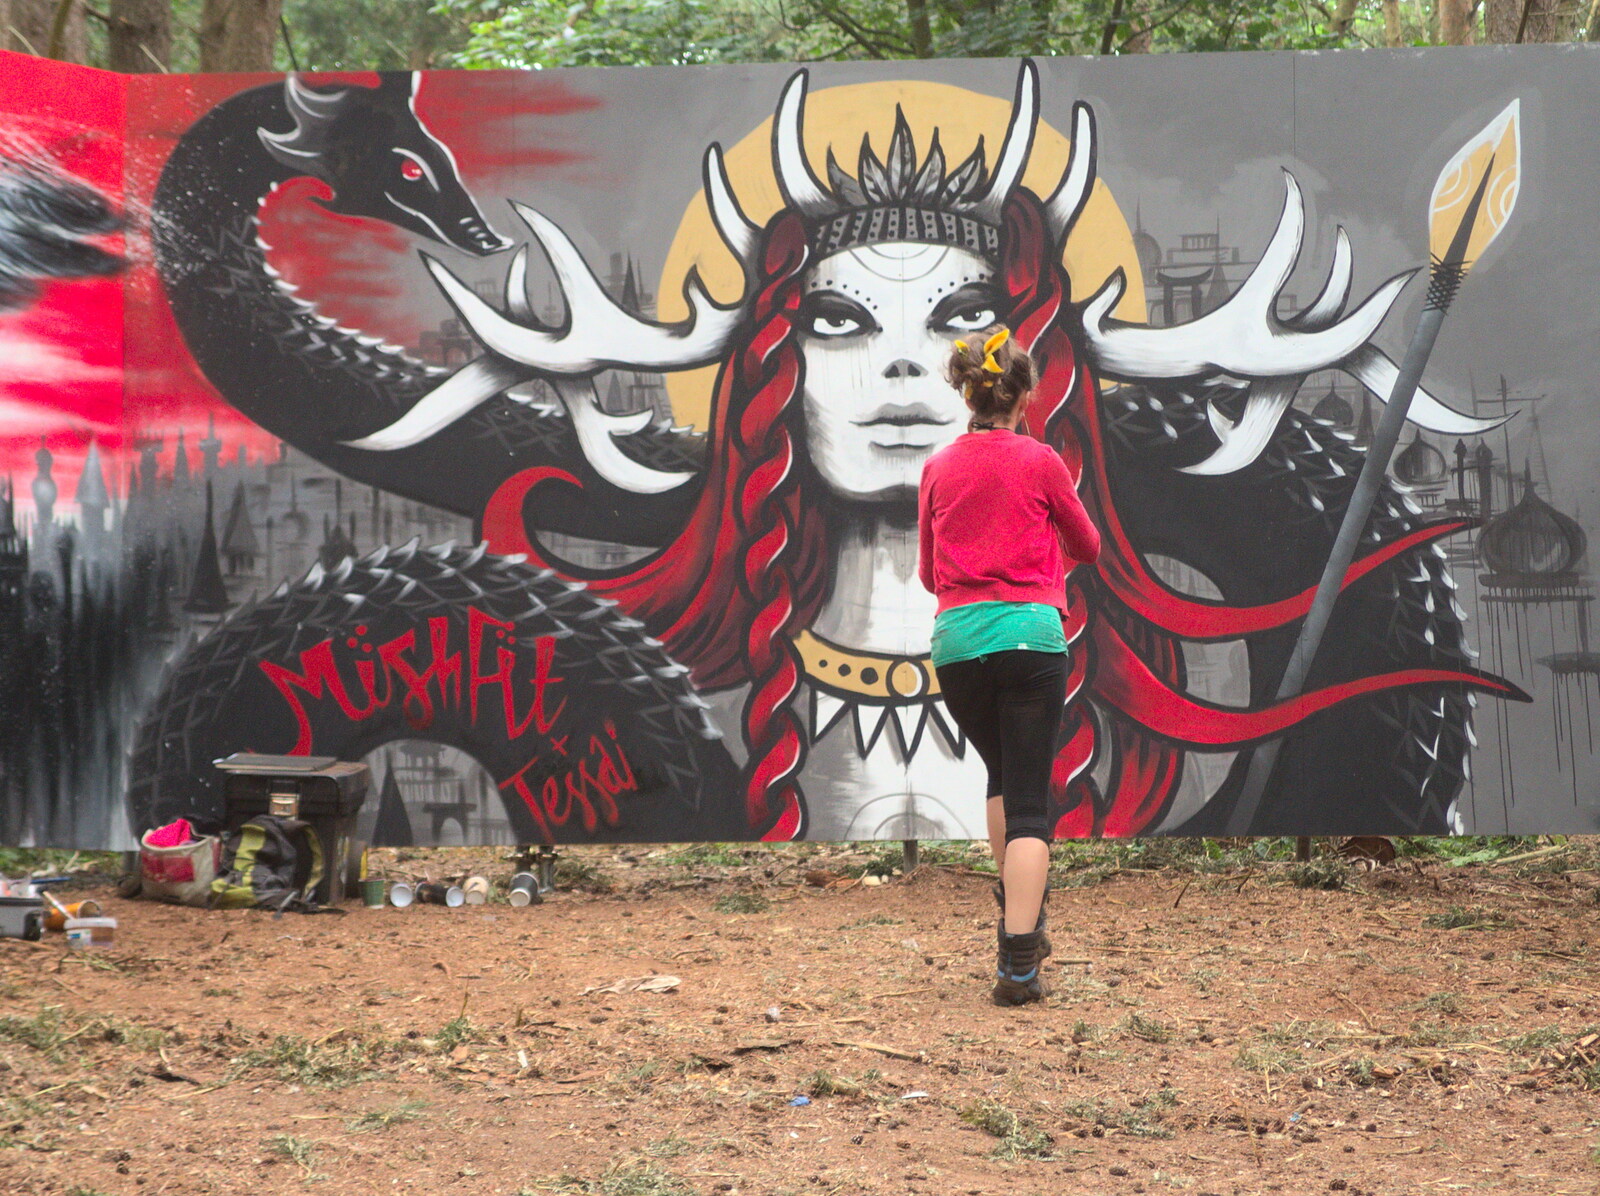 Some graffiti from The 8th Latitude Festival, Henham Park, Southwold, Suffolk - 18th July 2013